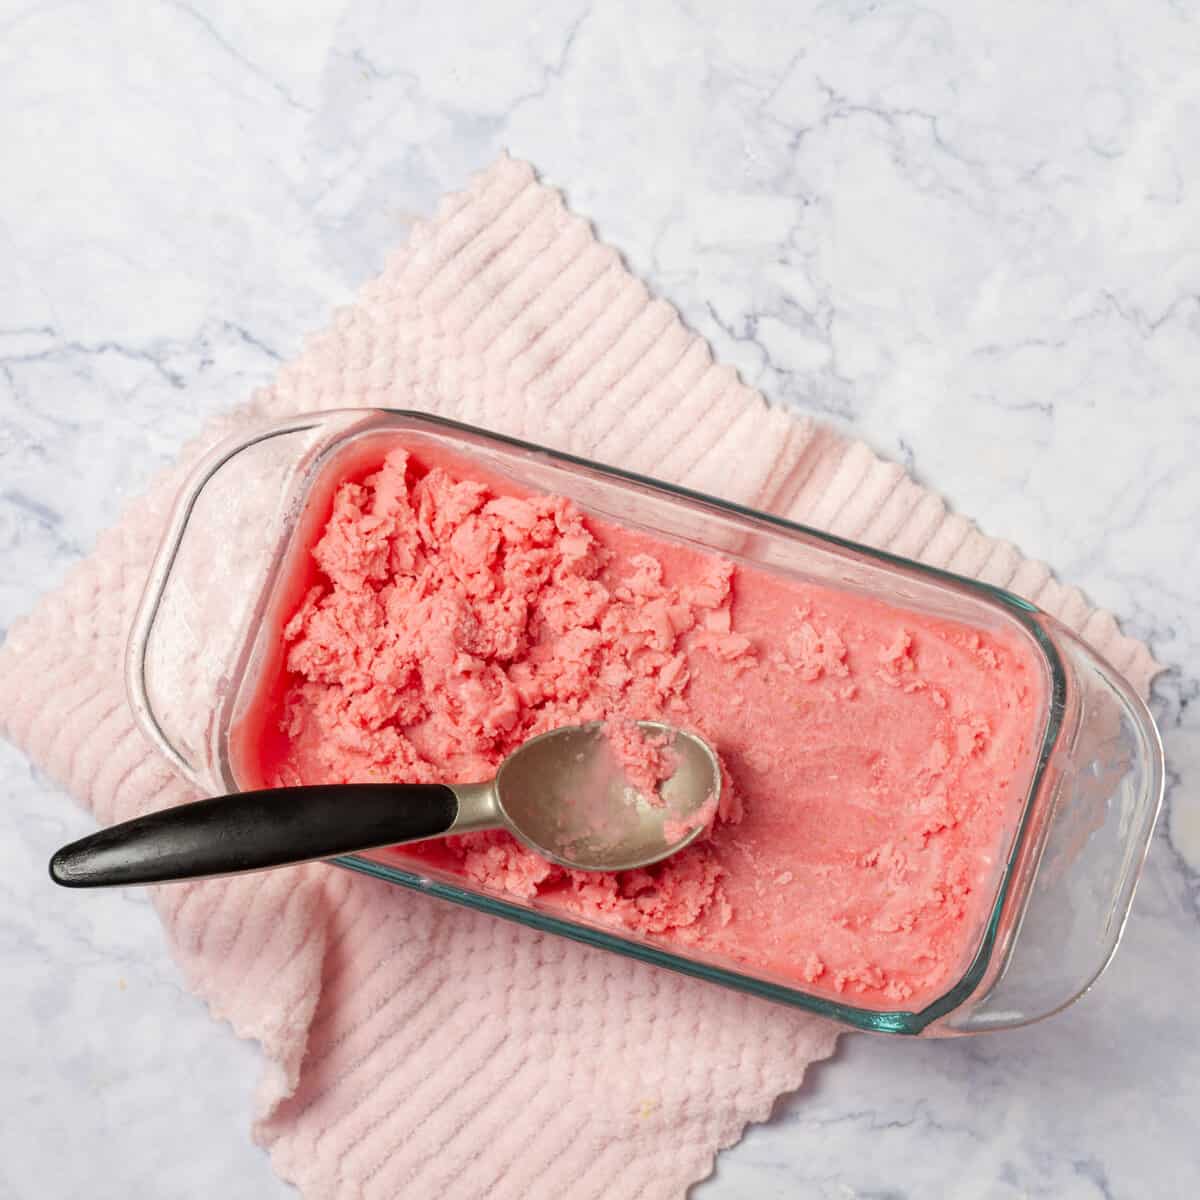 Strawberry Yogurt Ice Cream freezed in a bowl